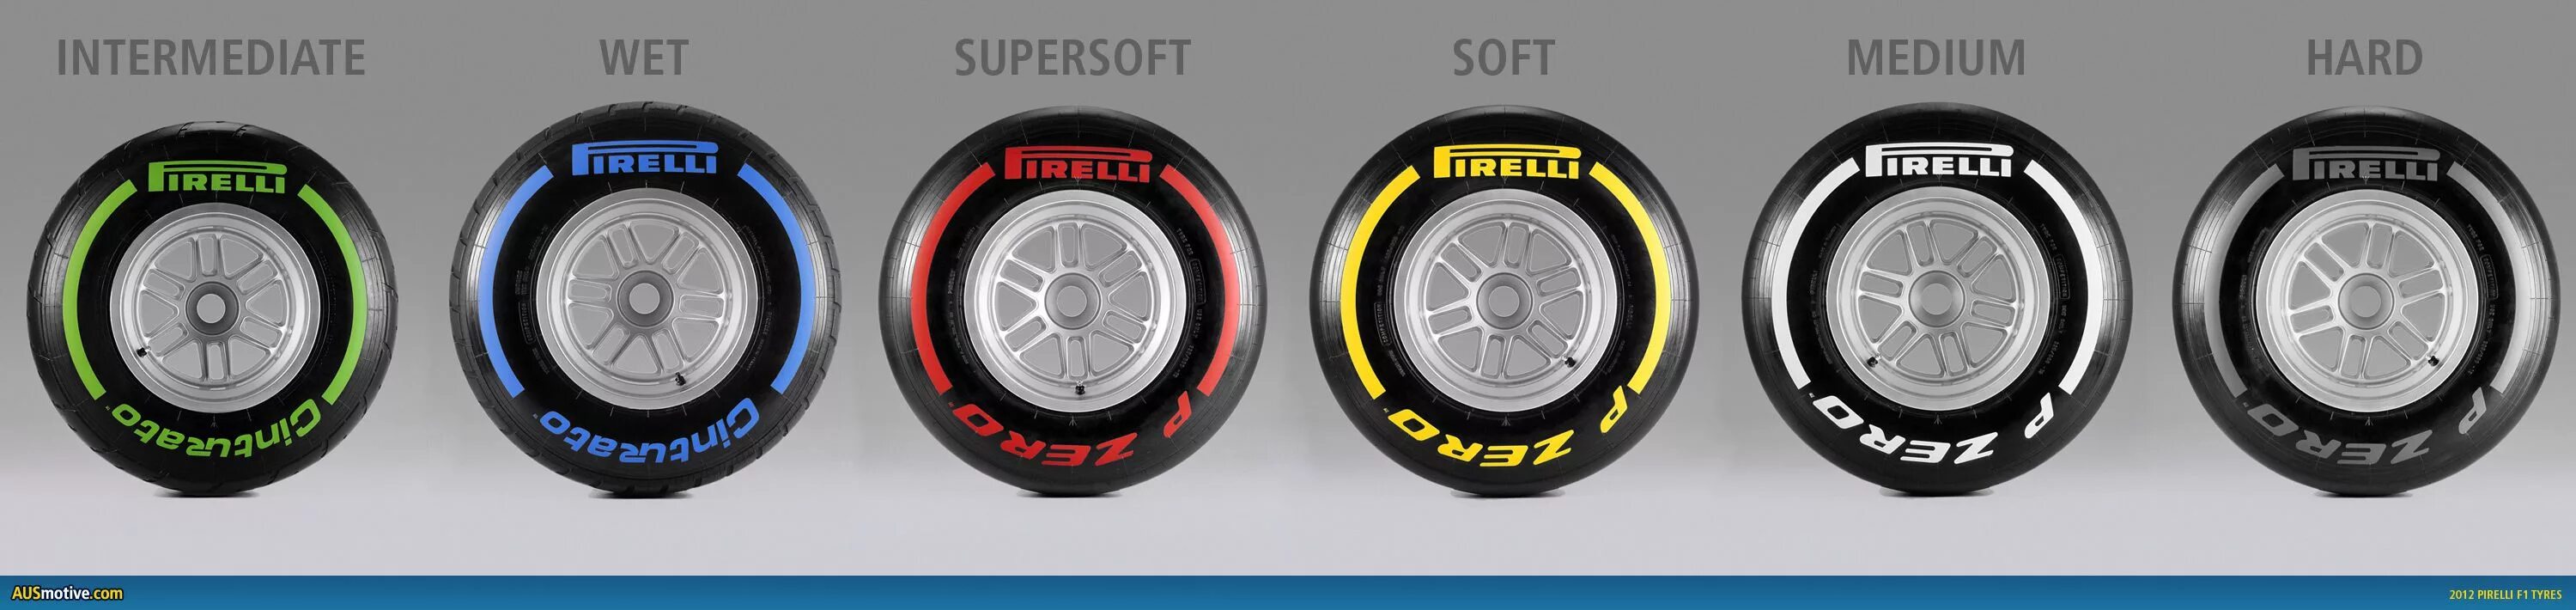 Harder media. Шины Пирелли формула 1. Колесо ф1 Пирелли. Шины софт формула 1. Pirelli hard f1.